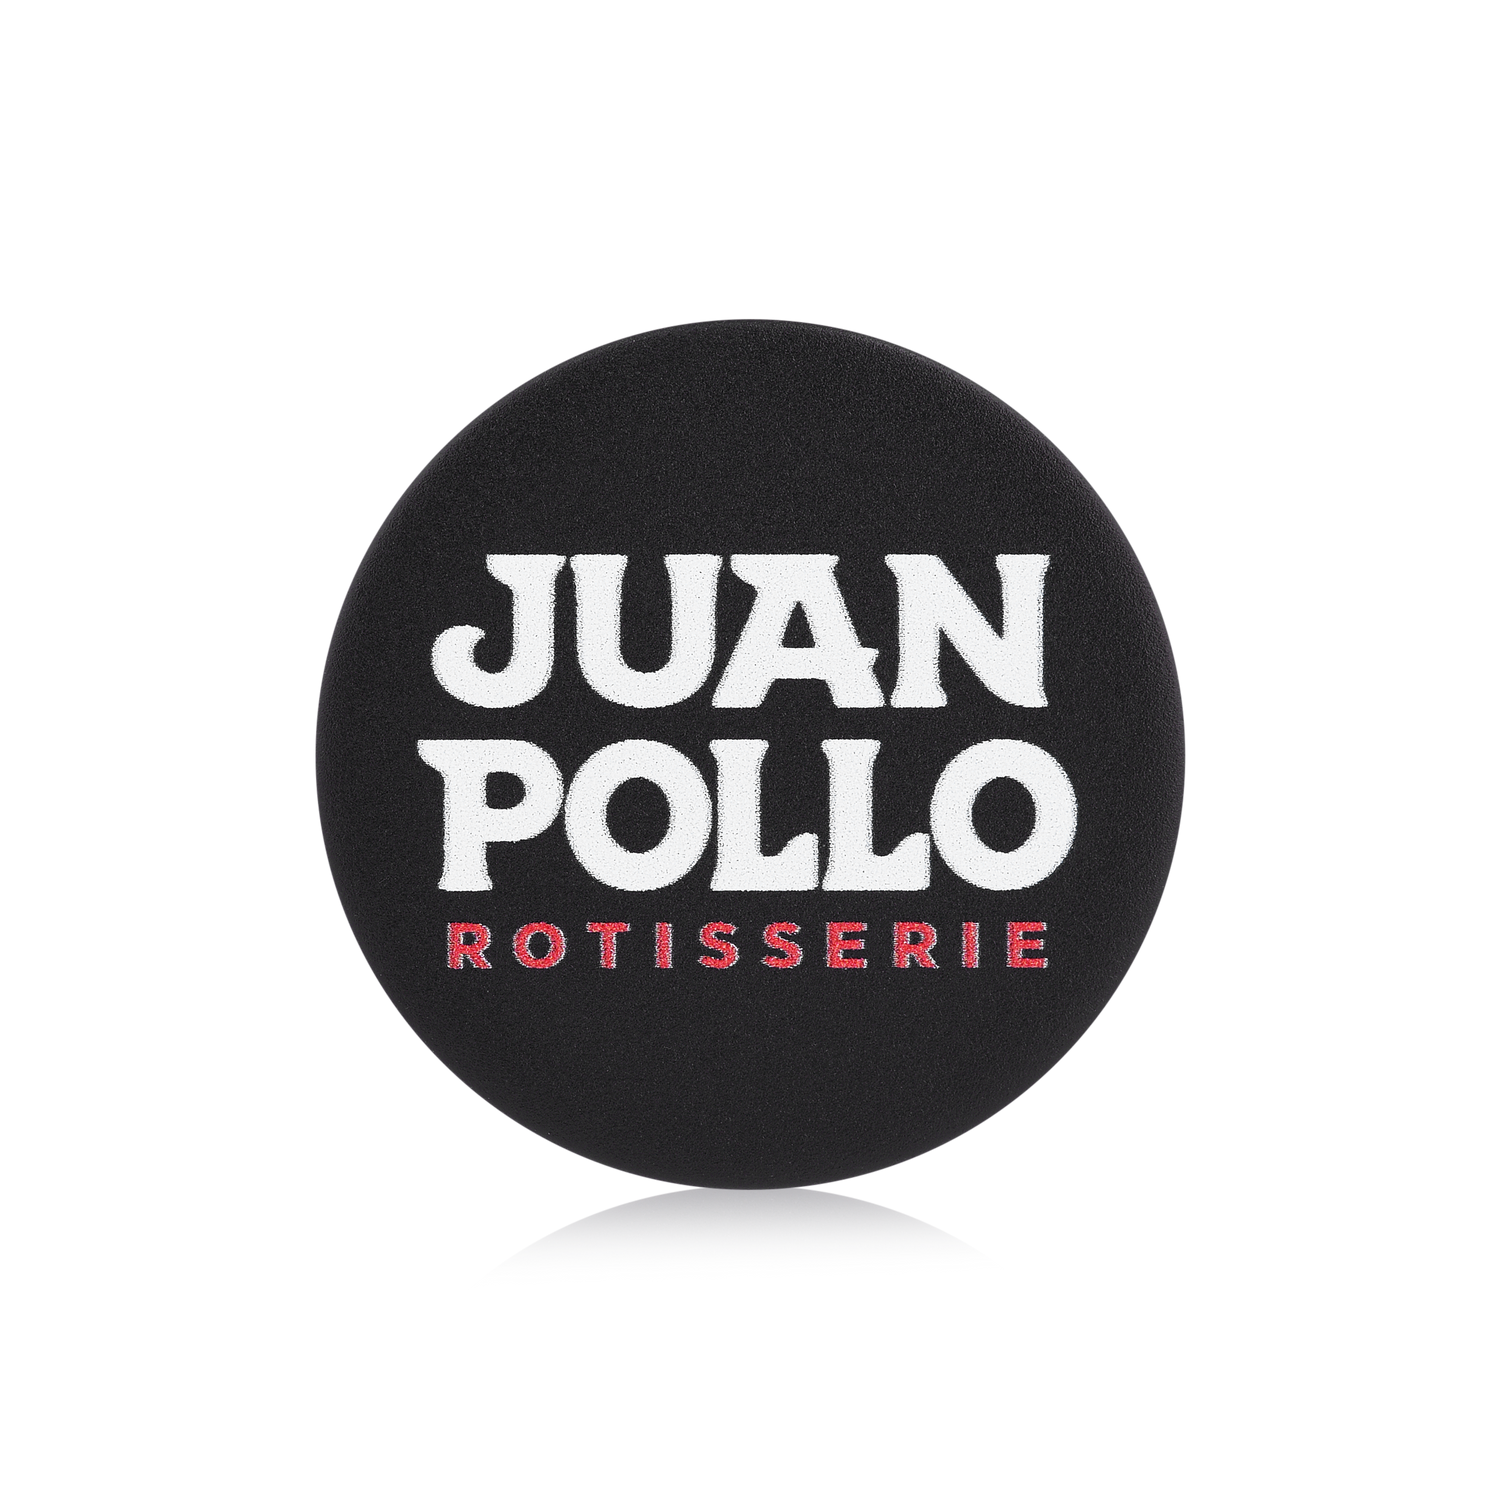 juan pollo rotisserie chicken logo pop socket for cell phones